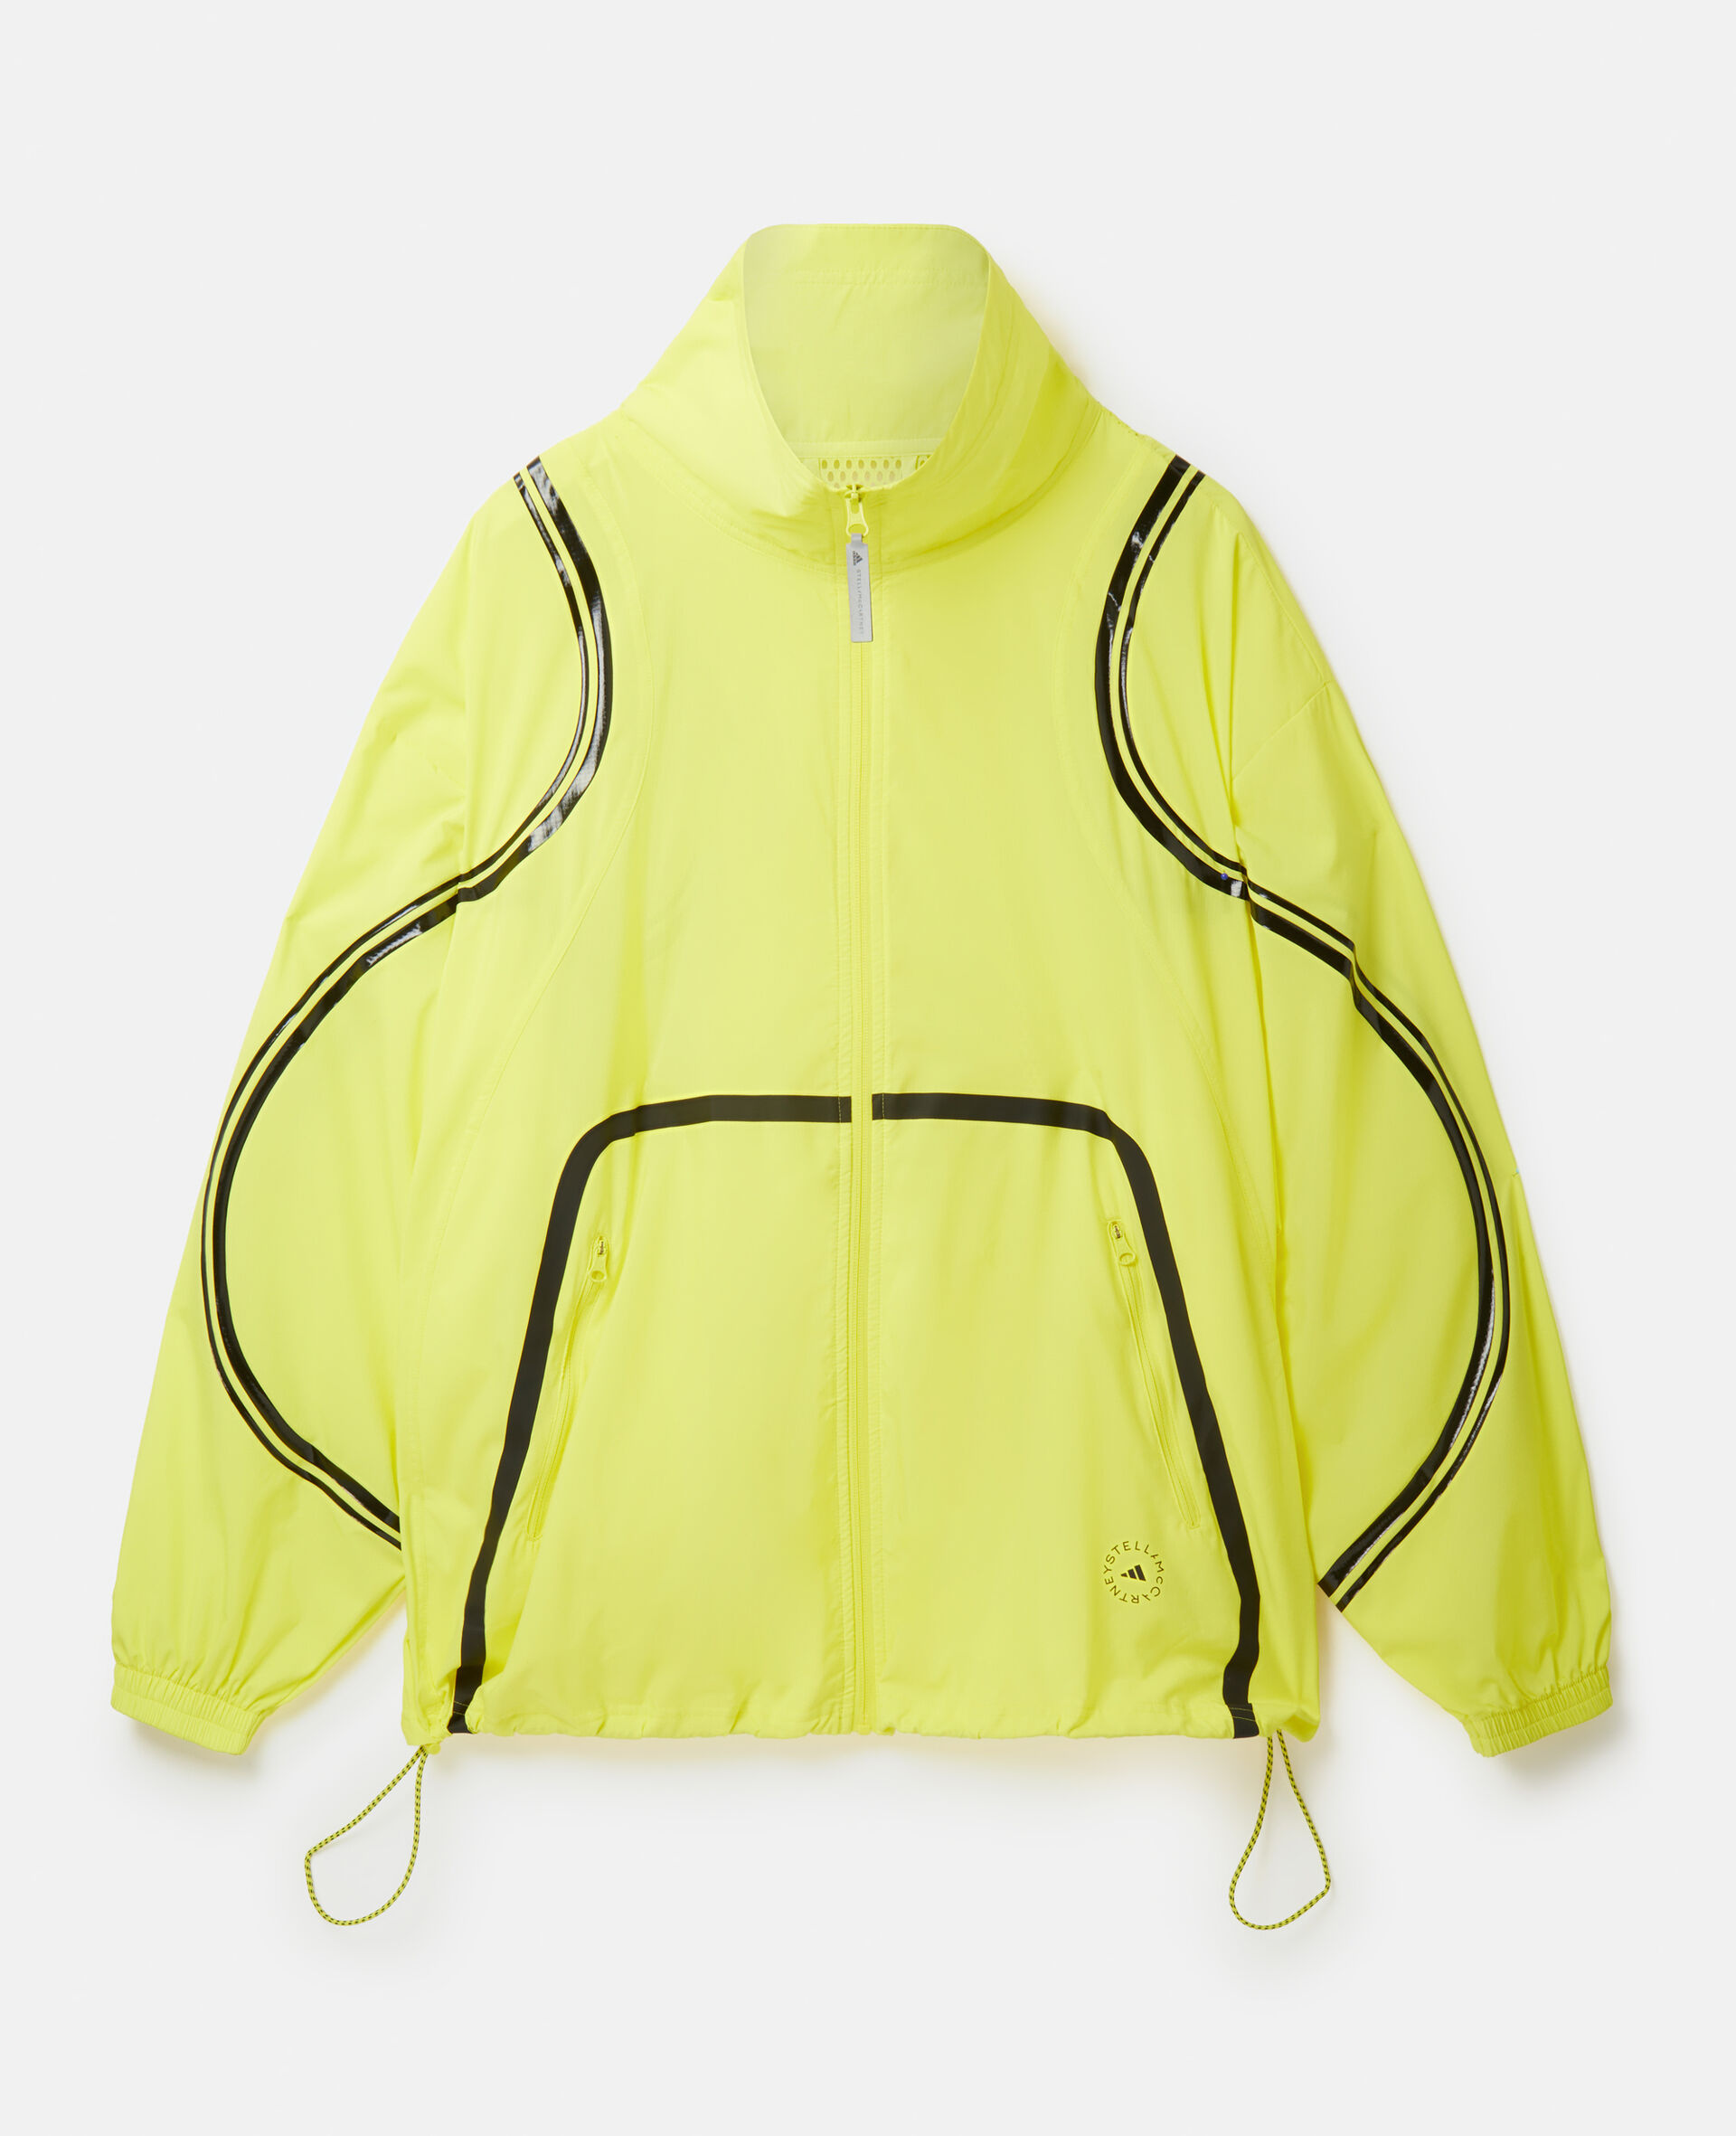 TruePace Woven Trainingsuit Plus Size Jacket-Yellow-large image number 0